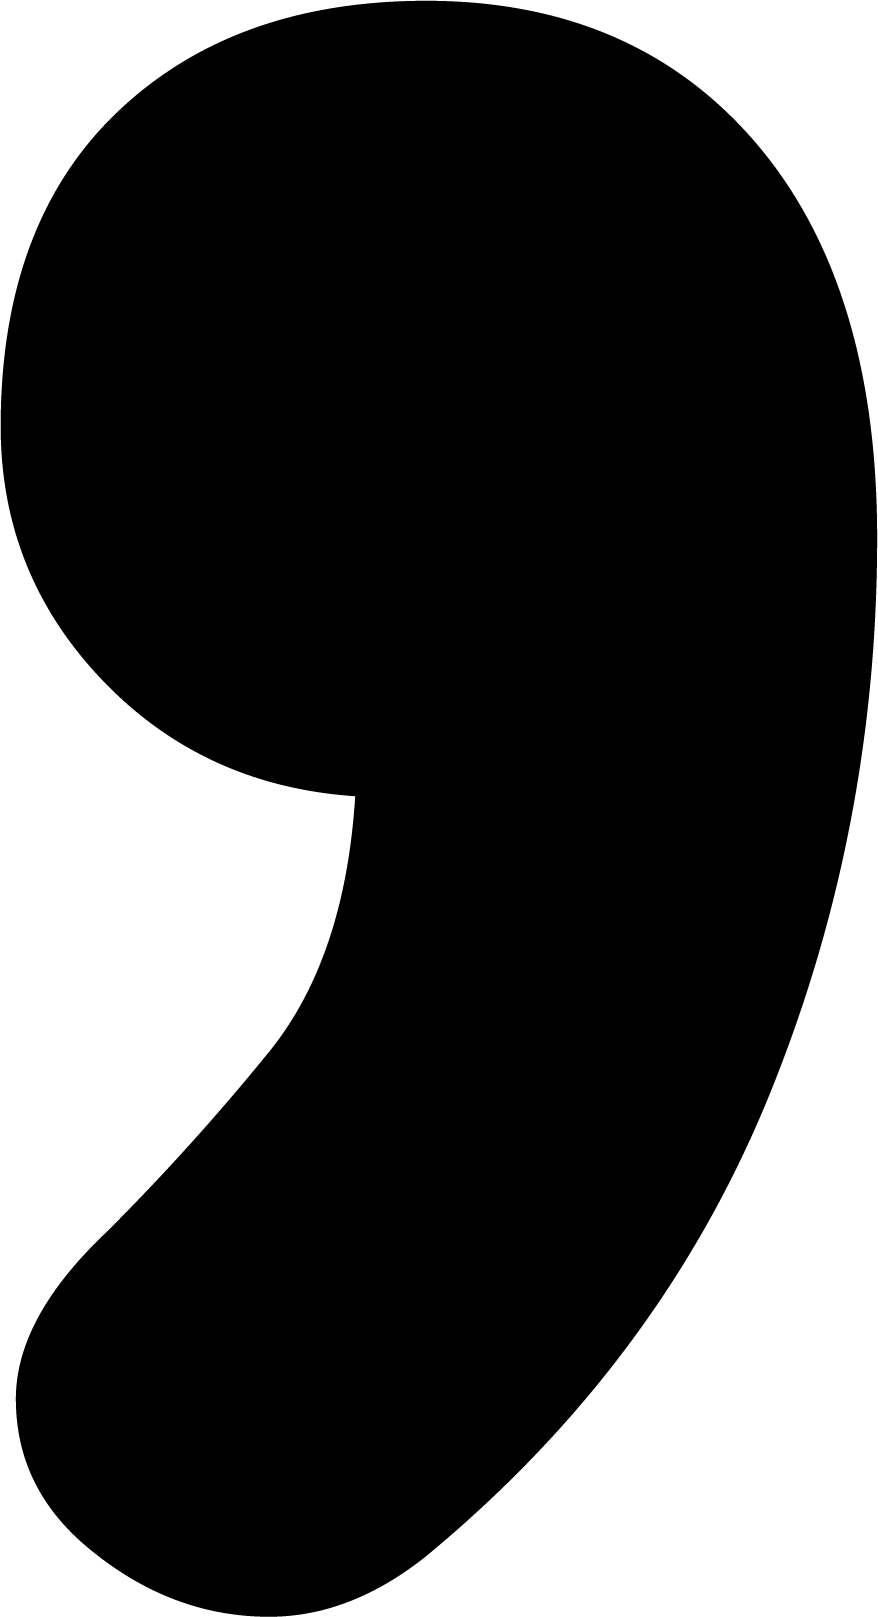 heybico branding logo schwarz single